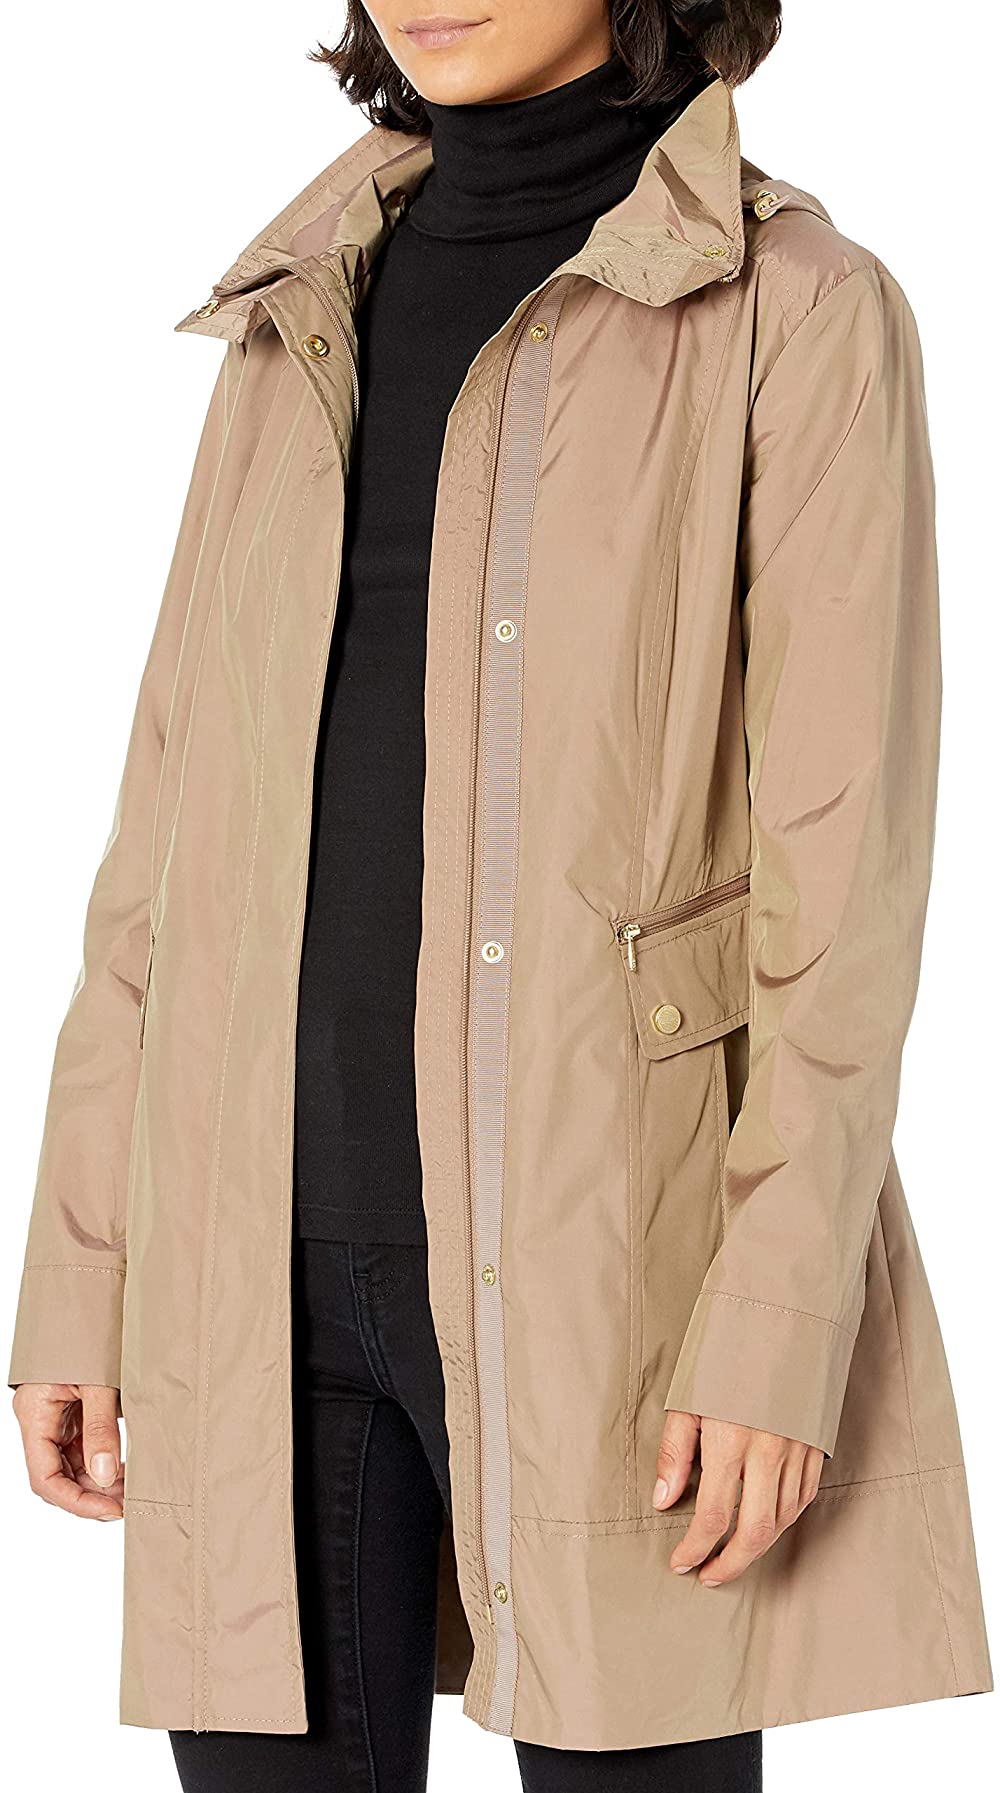 Women's Raincoats Windbreaker Rain Jacket Waterproof Outdoor Hooded Trench Coats 